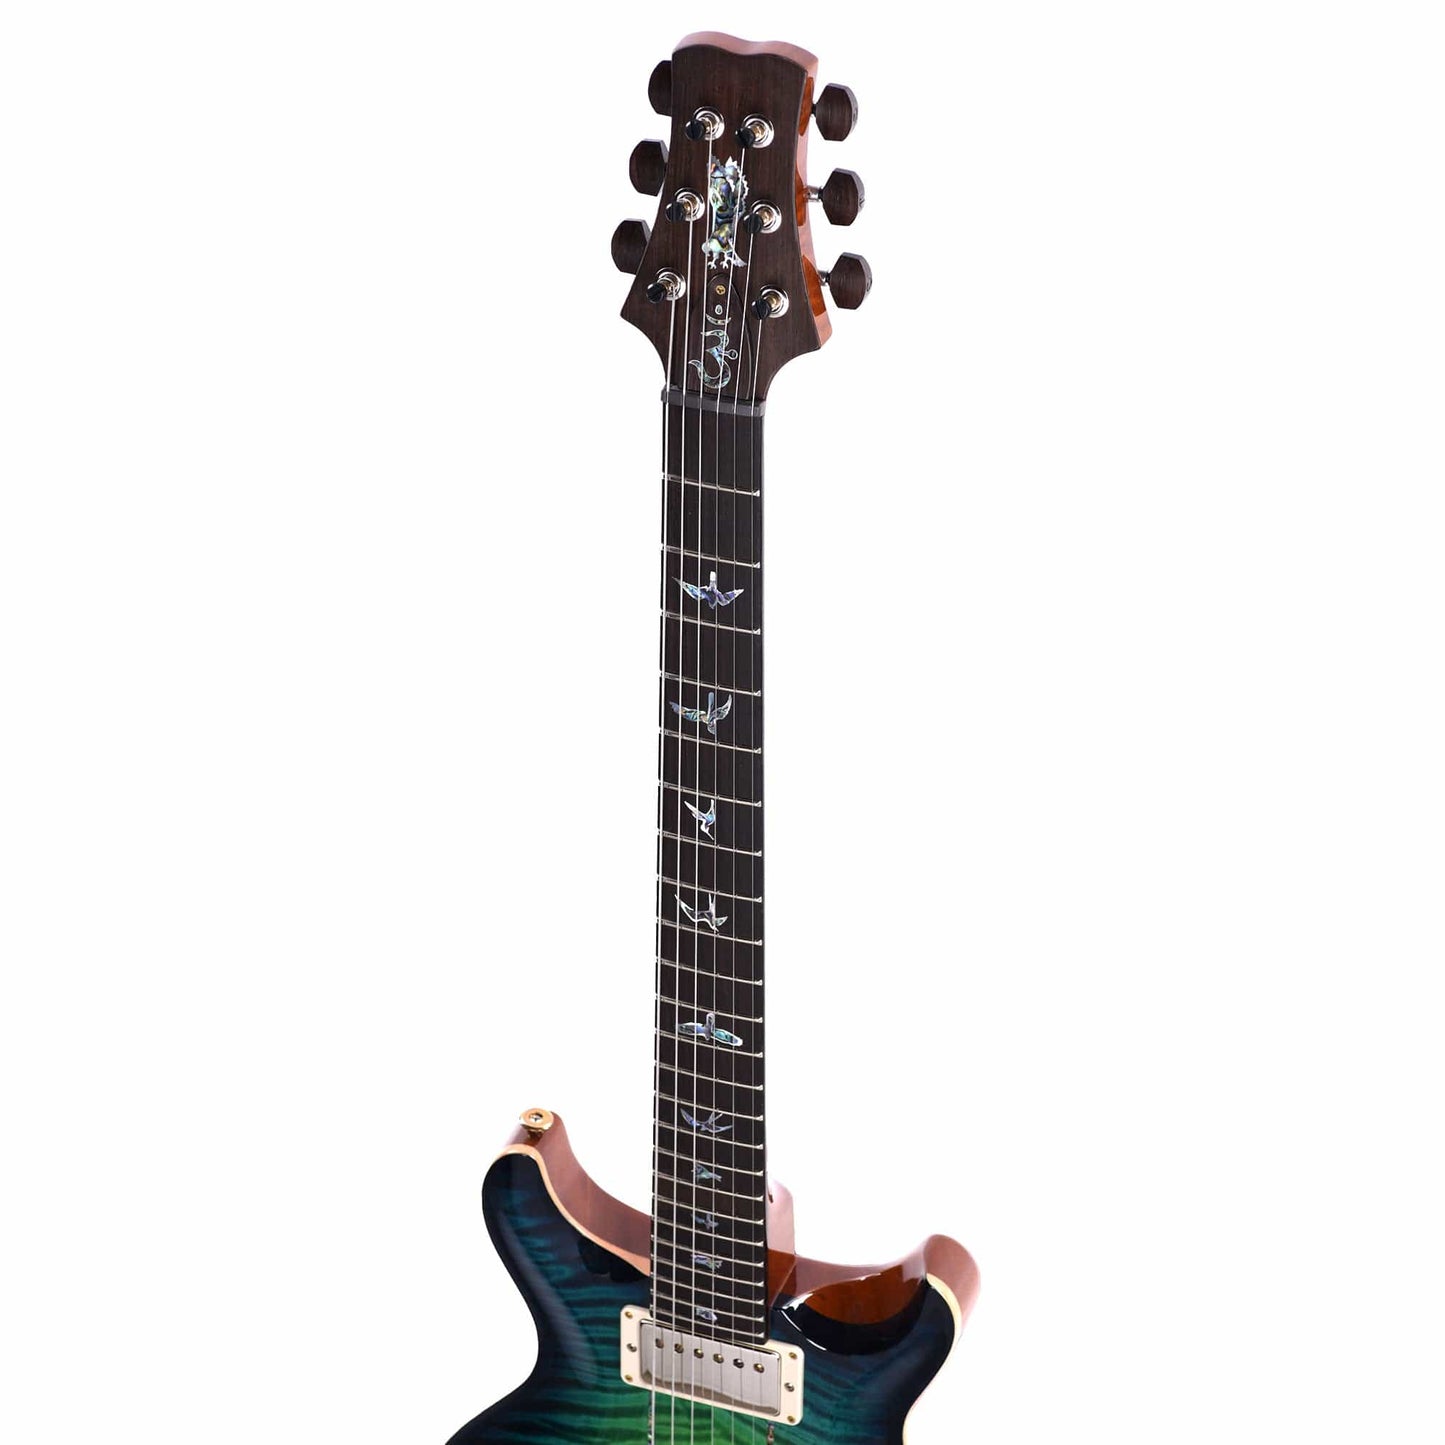 PRS Private Stock #10456 Santana II Laguna Glow Smoked Burst Curly Maple w/Figured Mahogany Neck & Brazilian Rosewood Fingerboard Electric Guitars / Solid Body